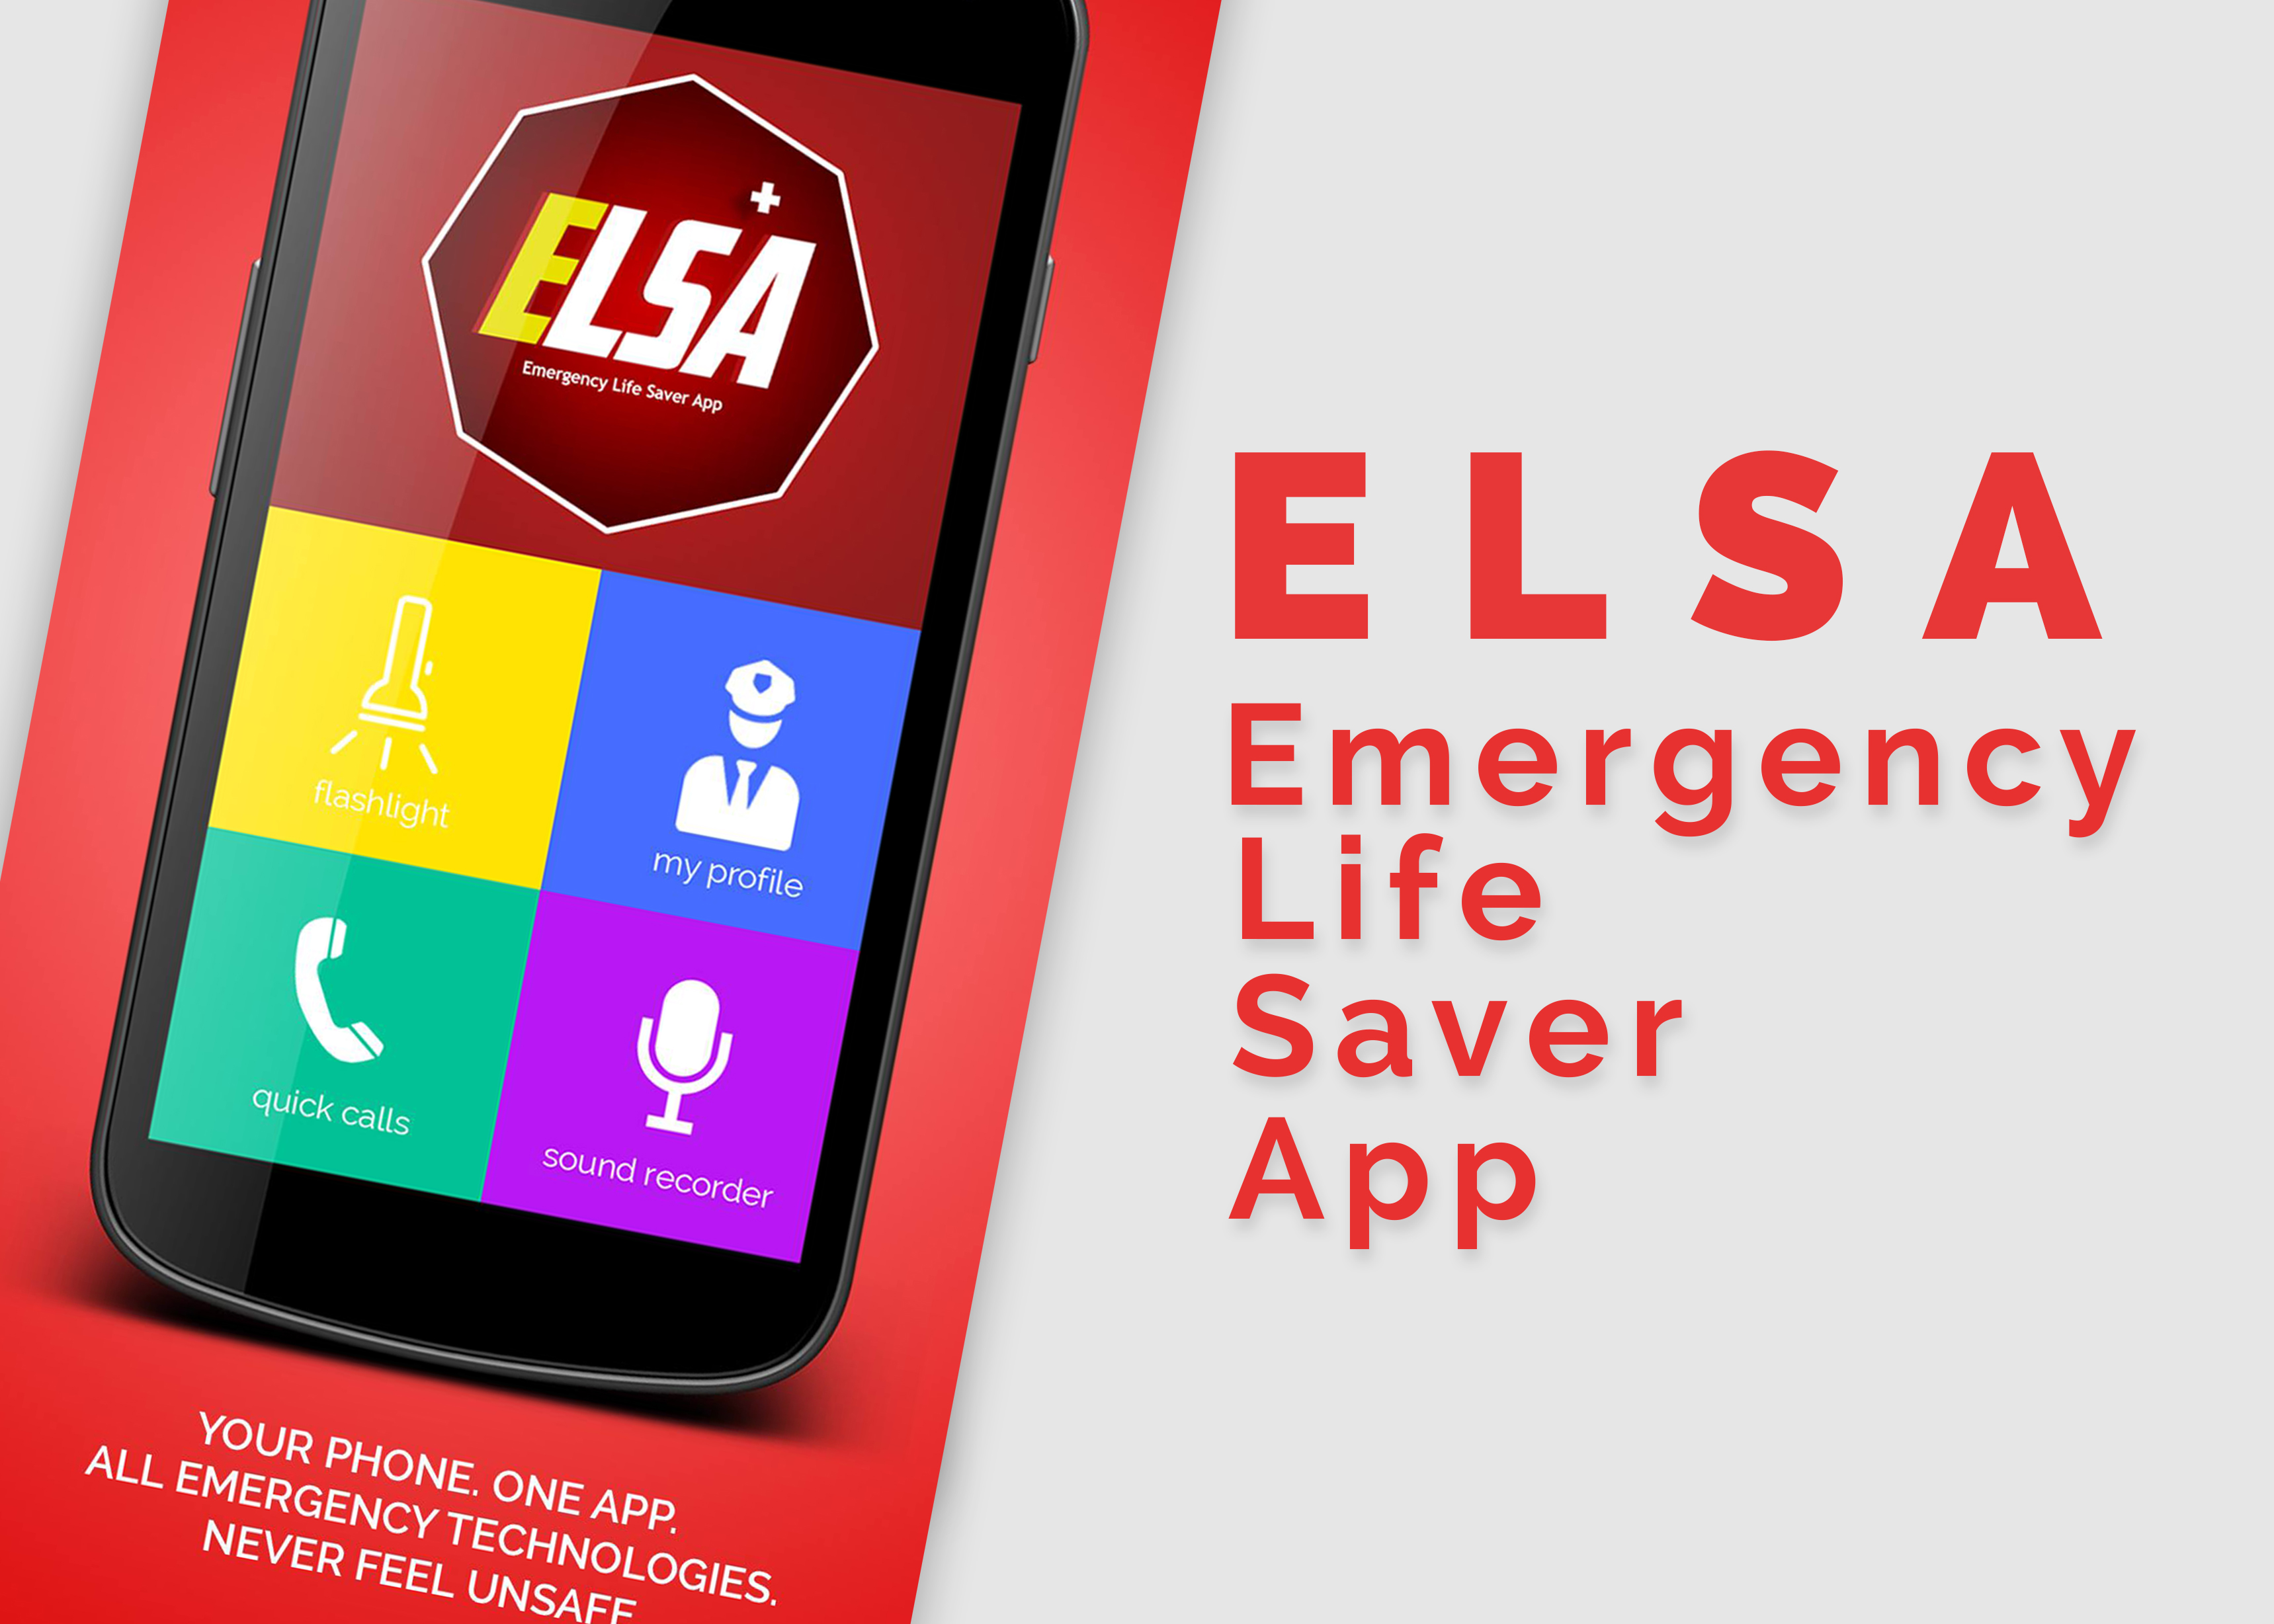 ELSA: Emergency Life Saver App